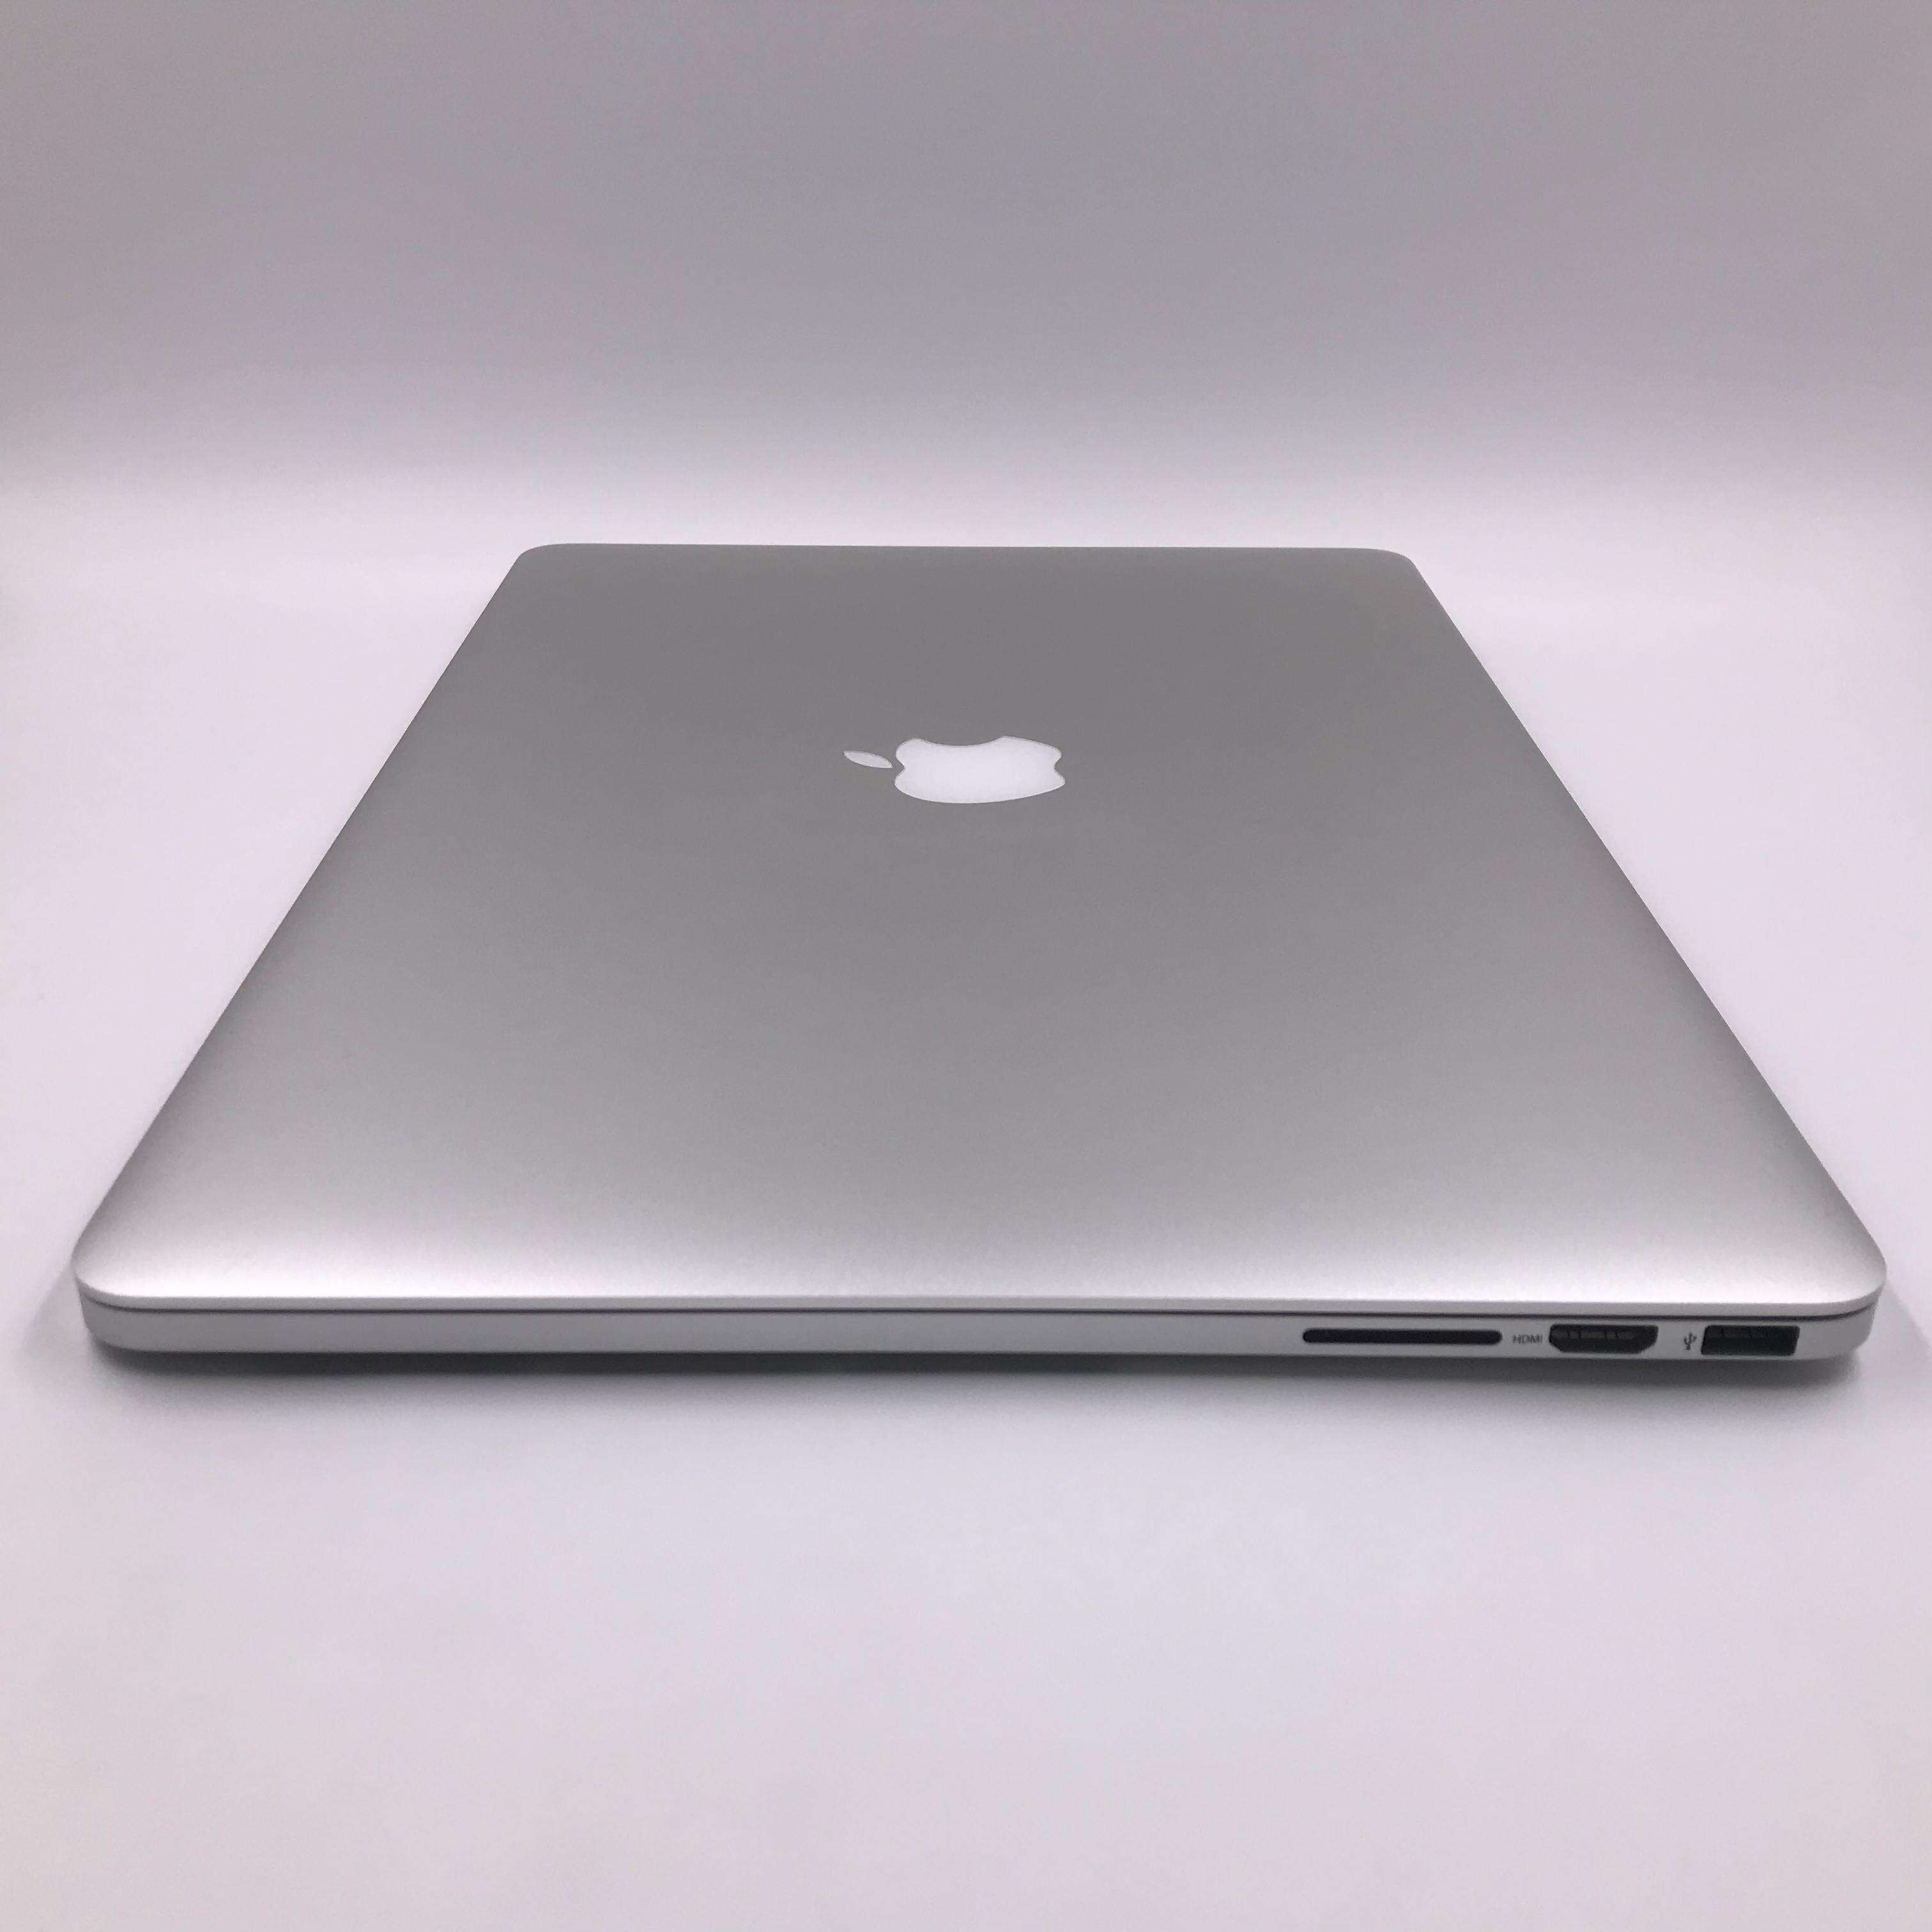 MacBook Pro (15",2015) 硬盘_256G/CPU_2.2 GHz Intel Core i7/显卡_Intel lris Pro 1536 MB 国行